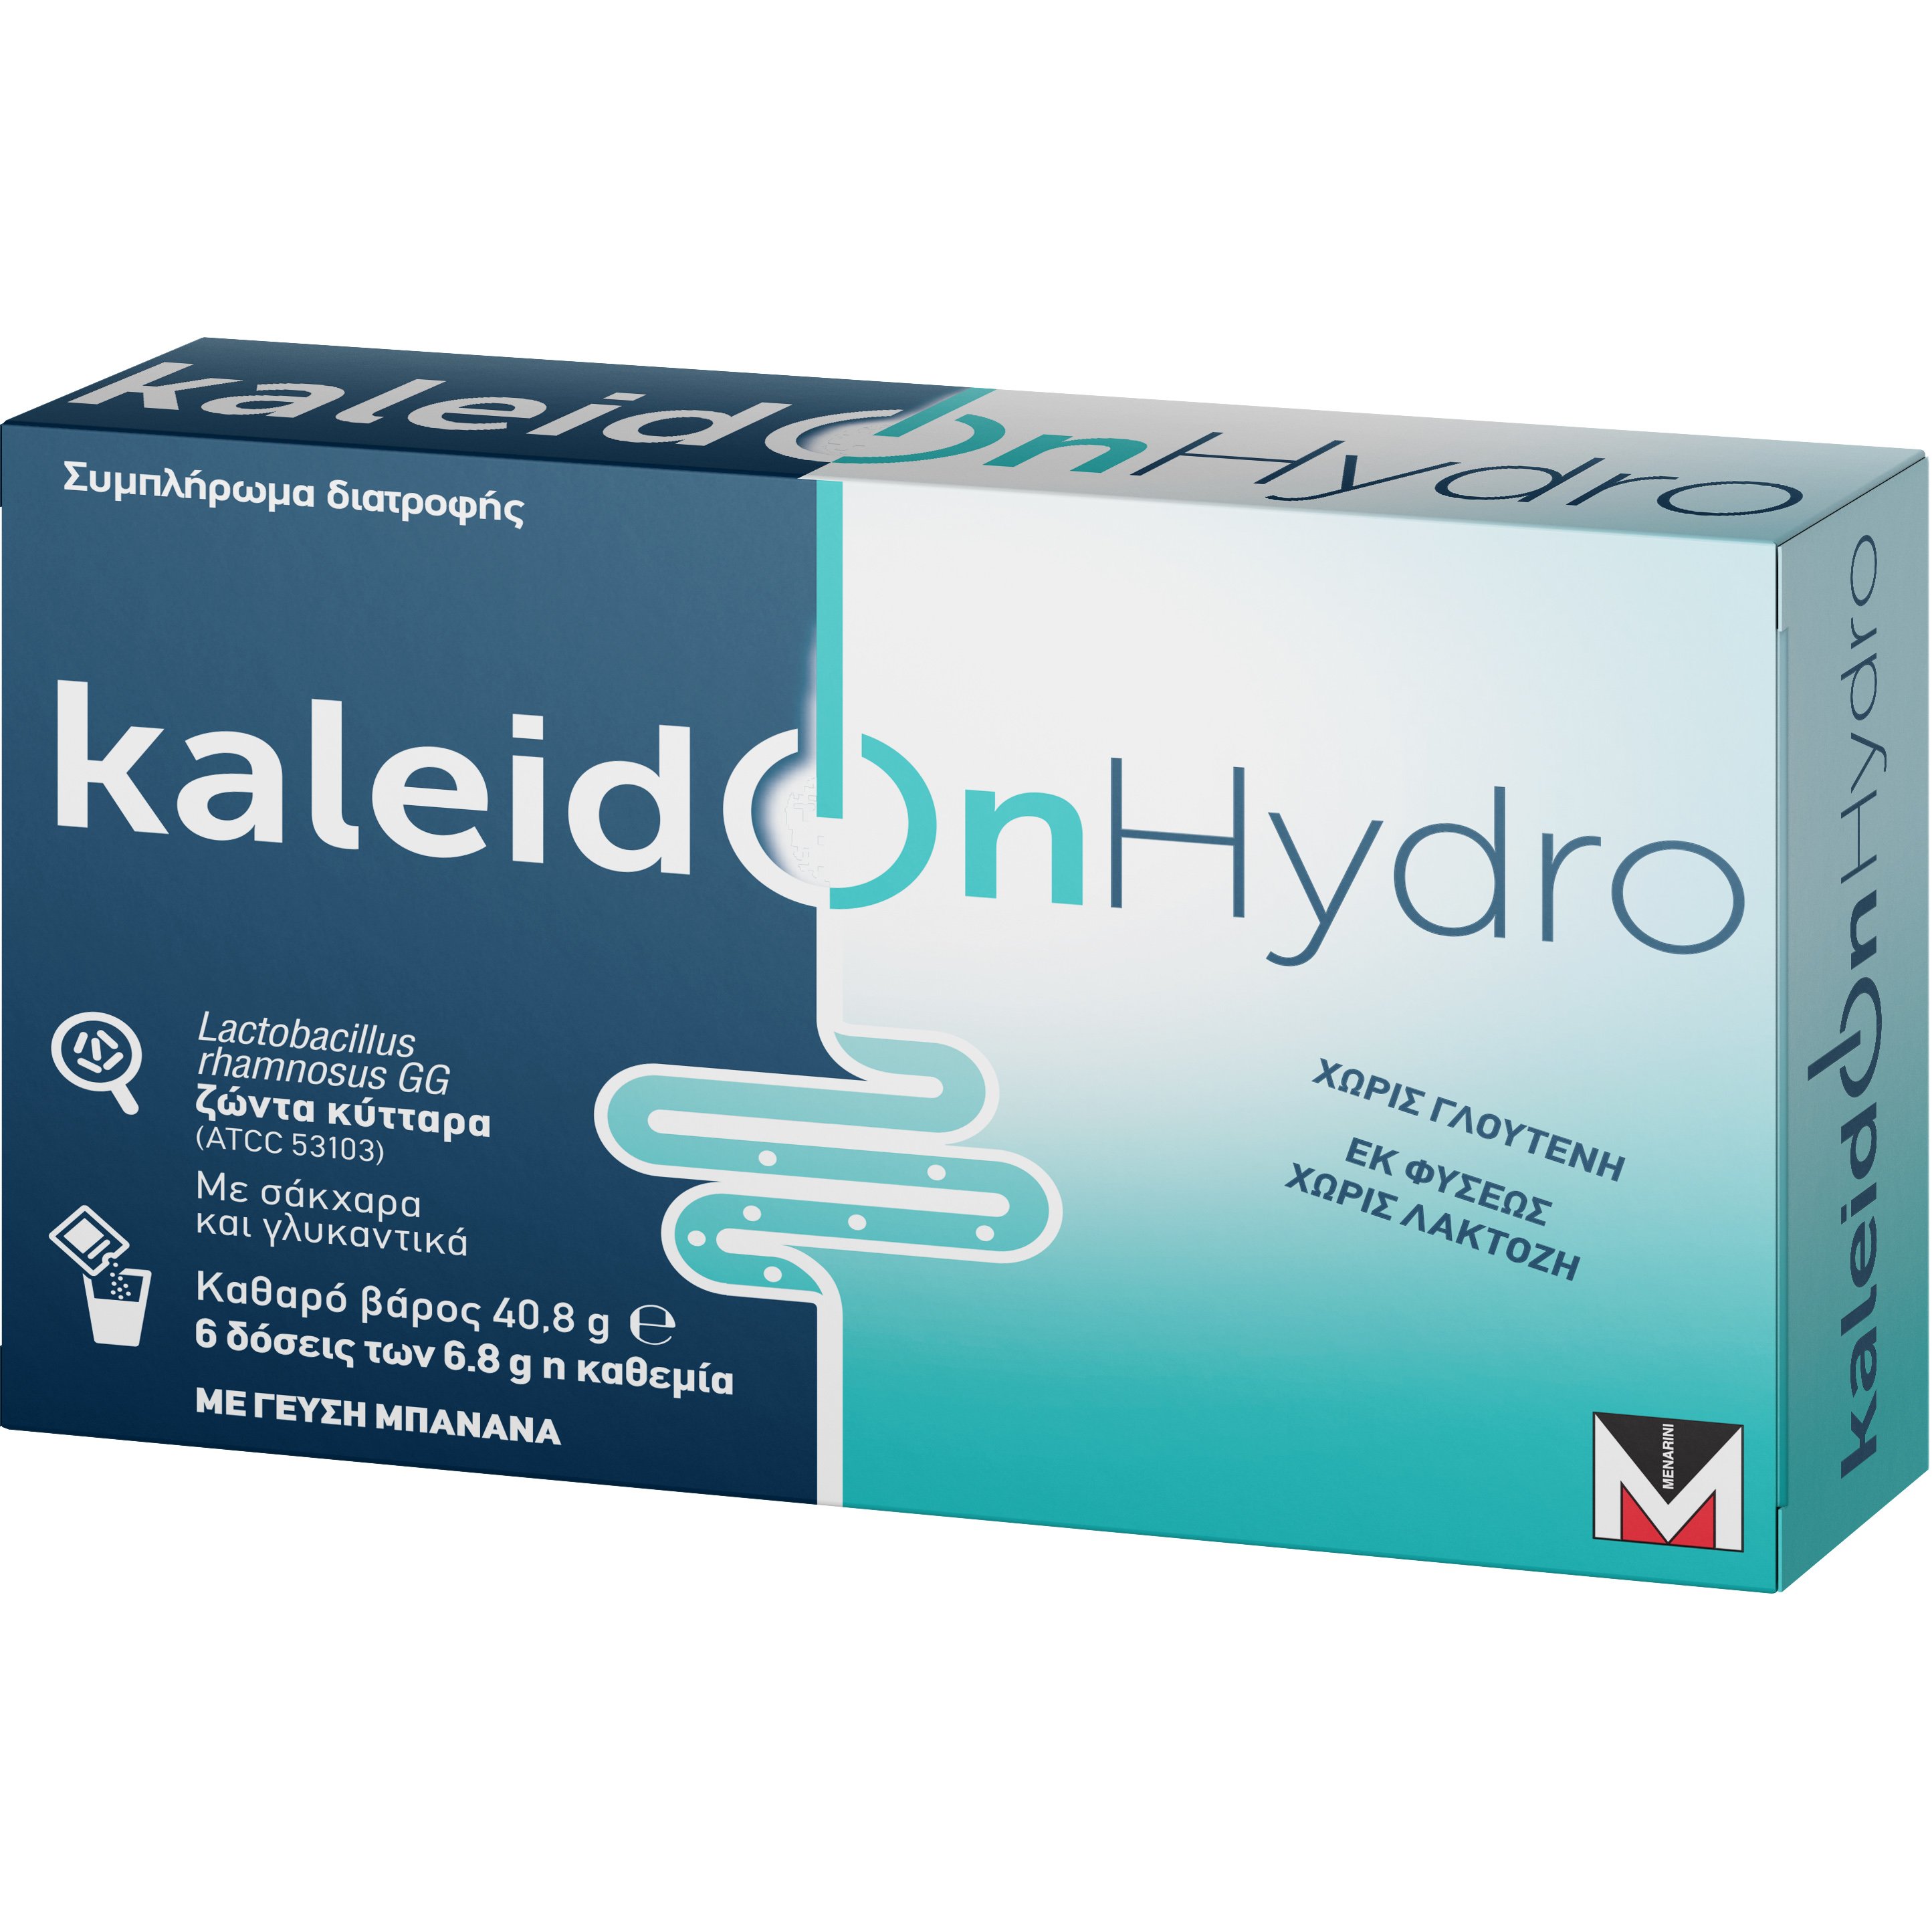 Menarini Kaleidon Hydro Προβιοτικό Συμπλήρωμα Διατροφής το Οποίο Συμβάλλει στην Ισορροπία της Χλωρίδας του Εντέρου 6sachets x 6,8g